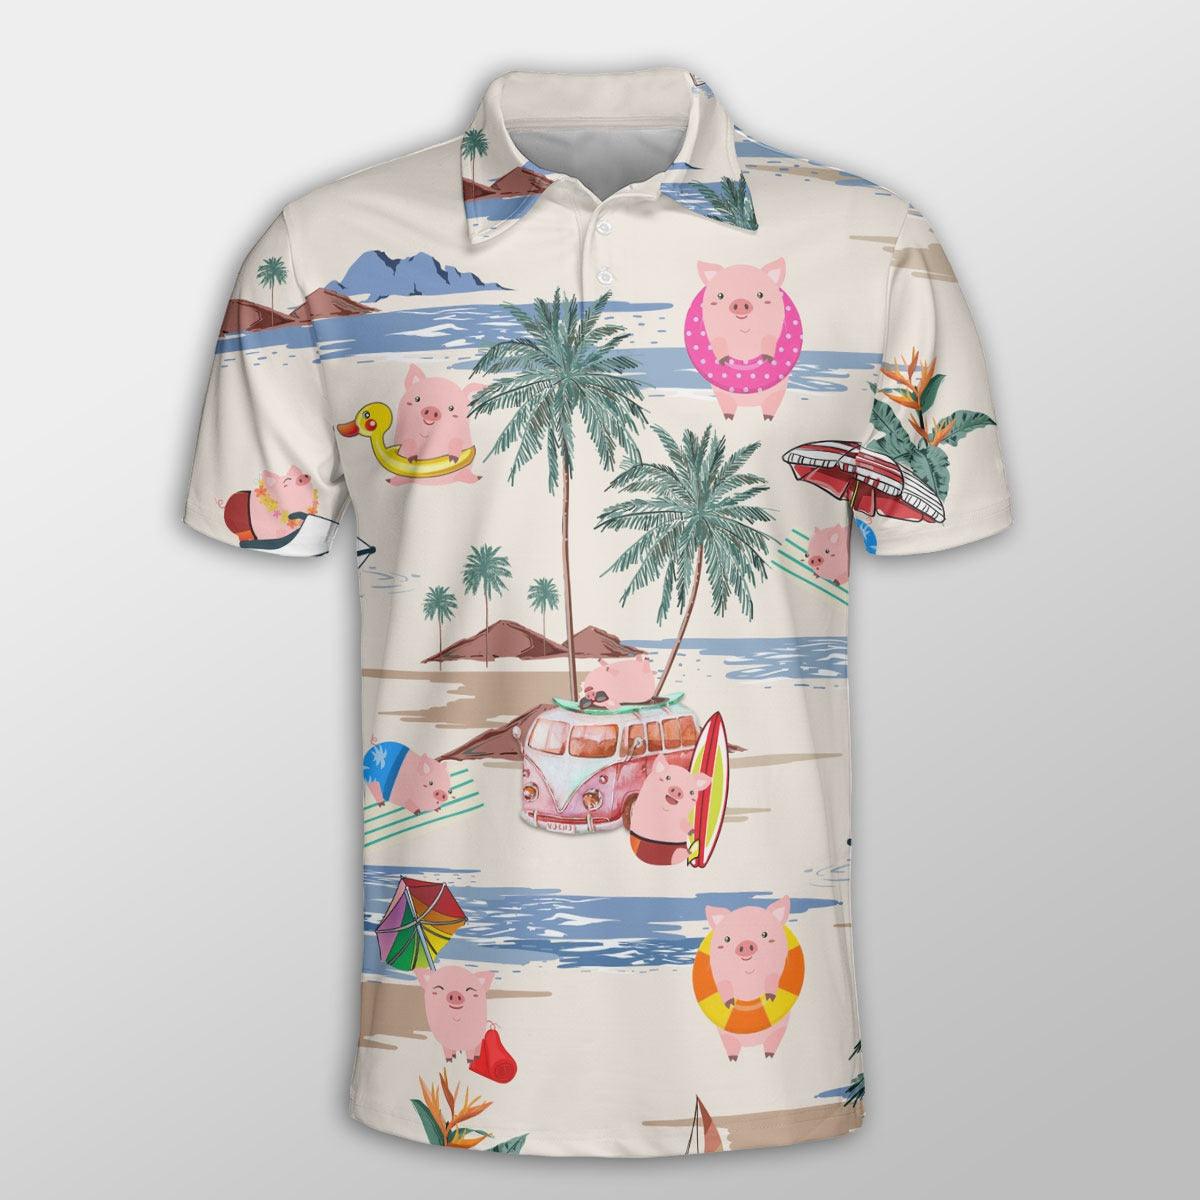 Pig Men Polo Shirt For Summer - Pig Summer Beach Pattern Button Shirt For Men - Perfect Gift For Pig Lovers, Cattle Lovers - Amzanimalsgift